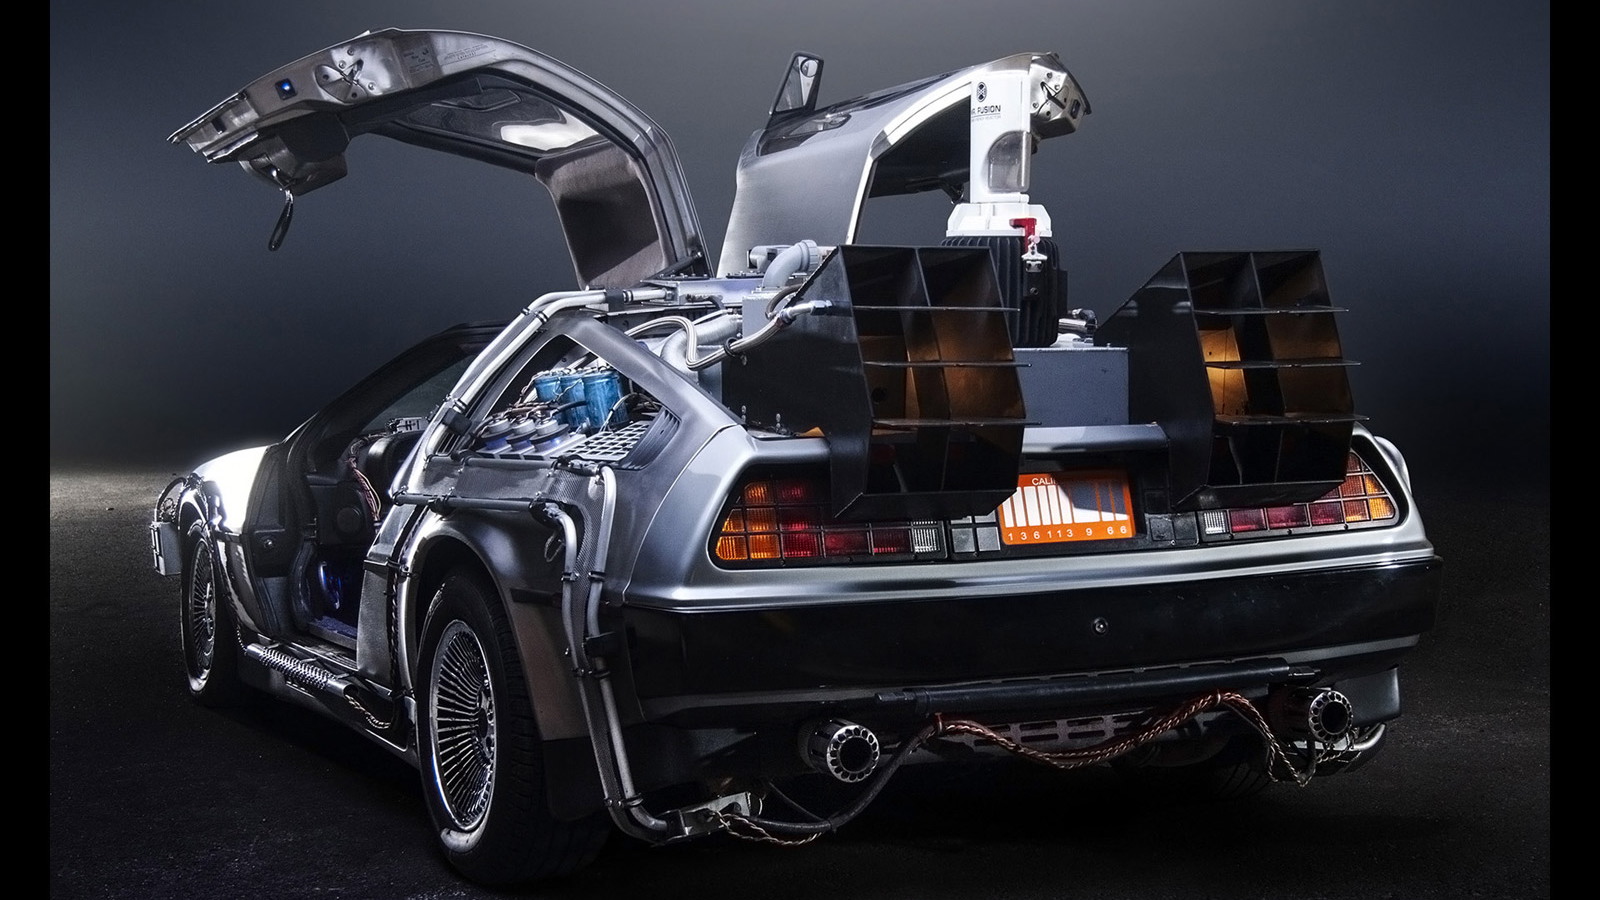 DeLorean Time Machine replica (Image via Serious Wheels)